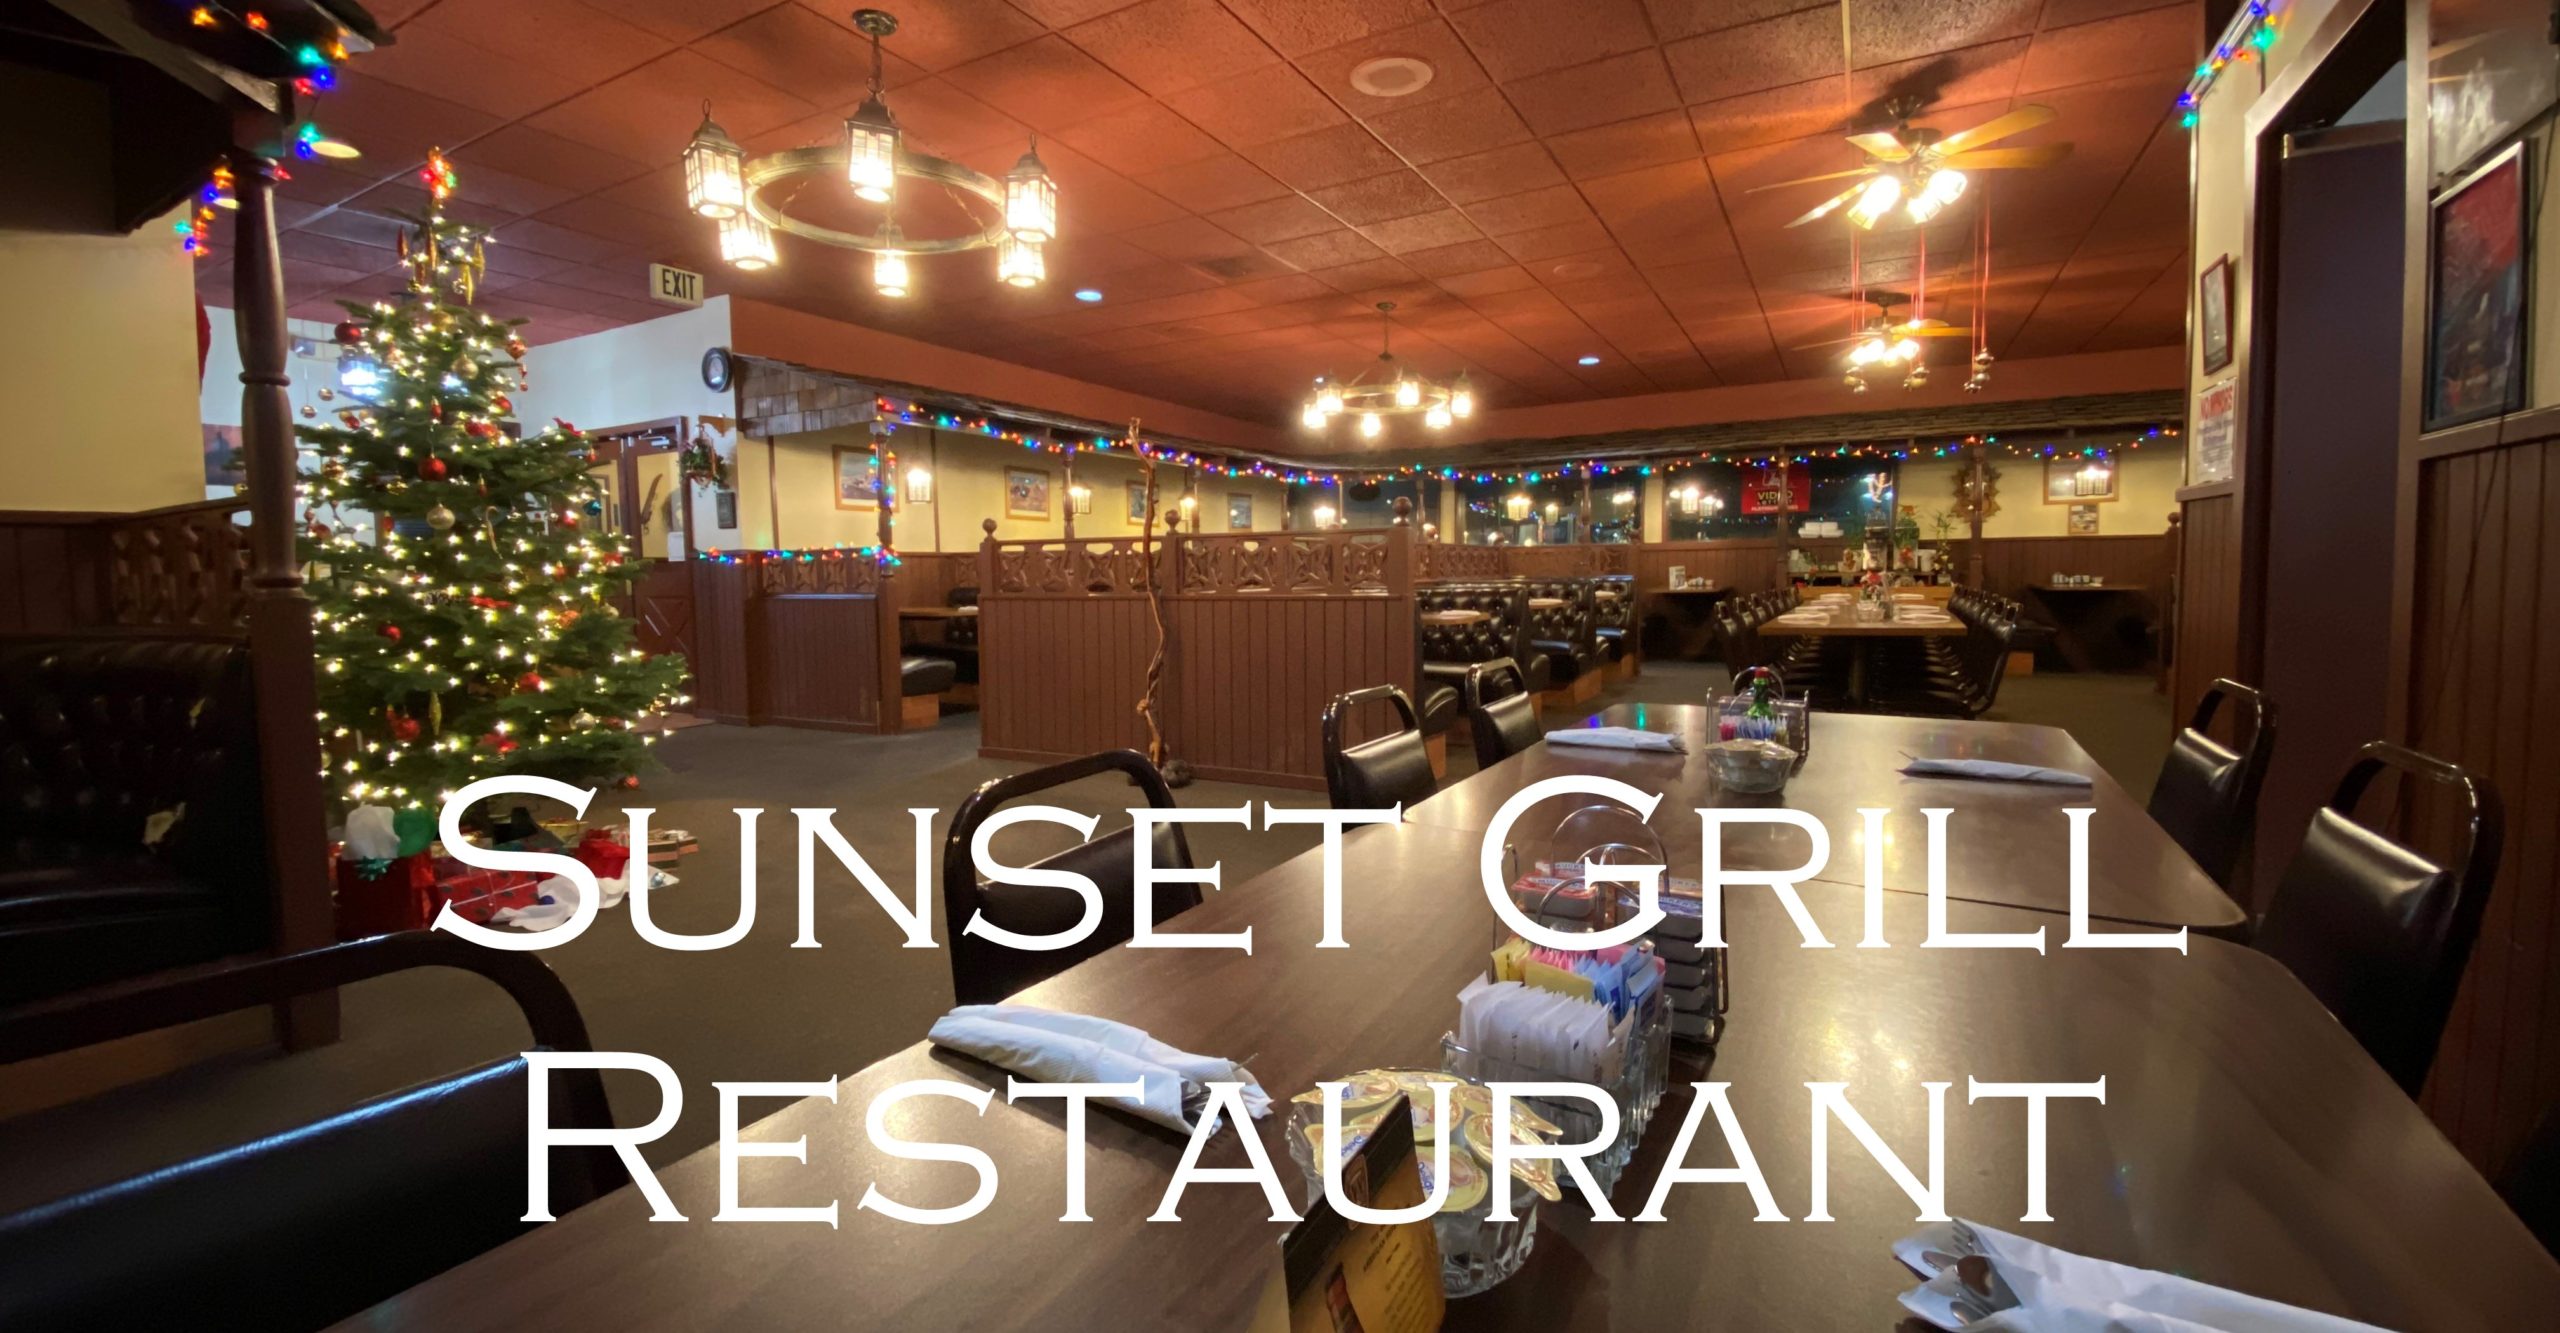 Inside Sunset Grill